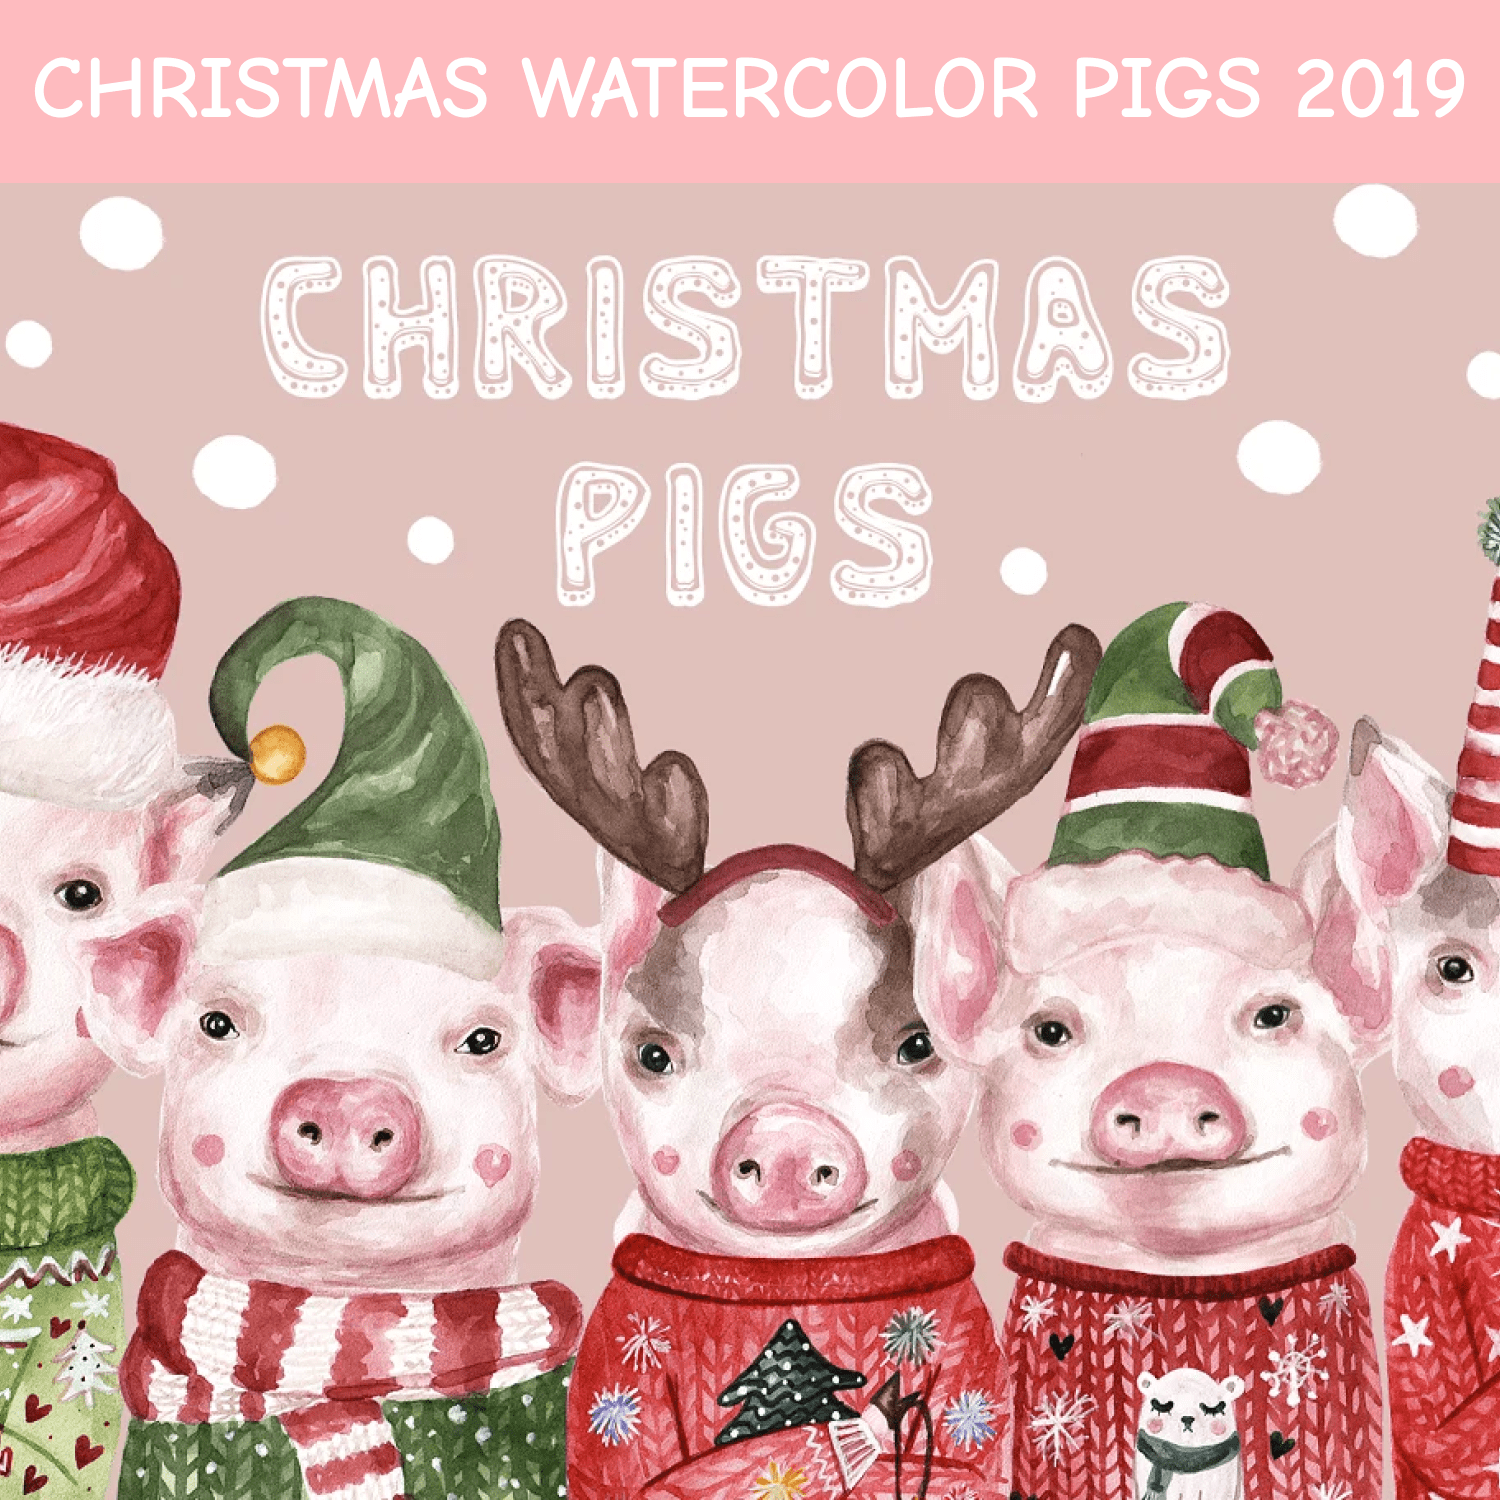 Christmas Watercolor Pigs 2019.